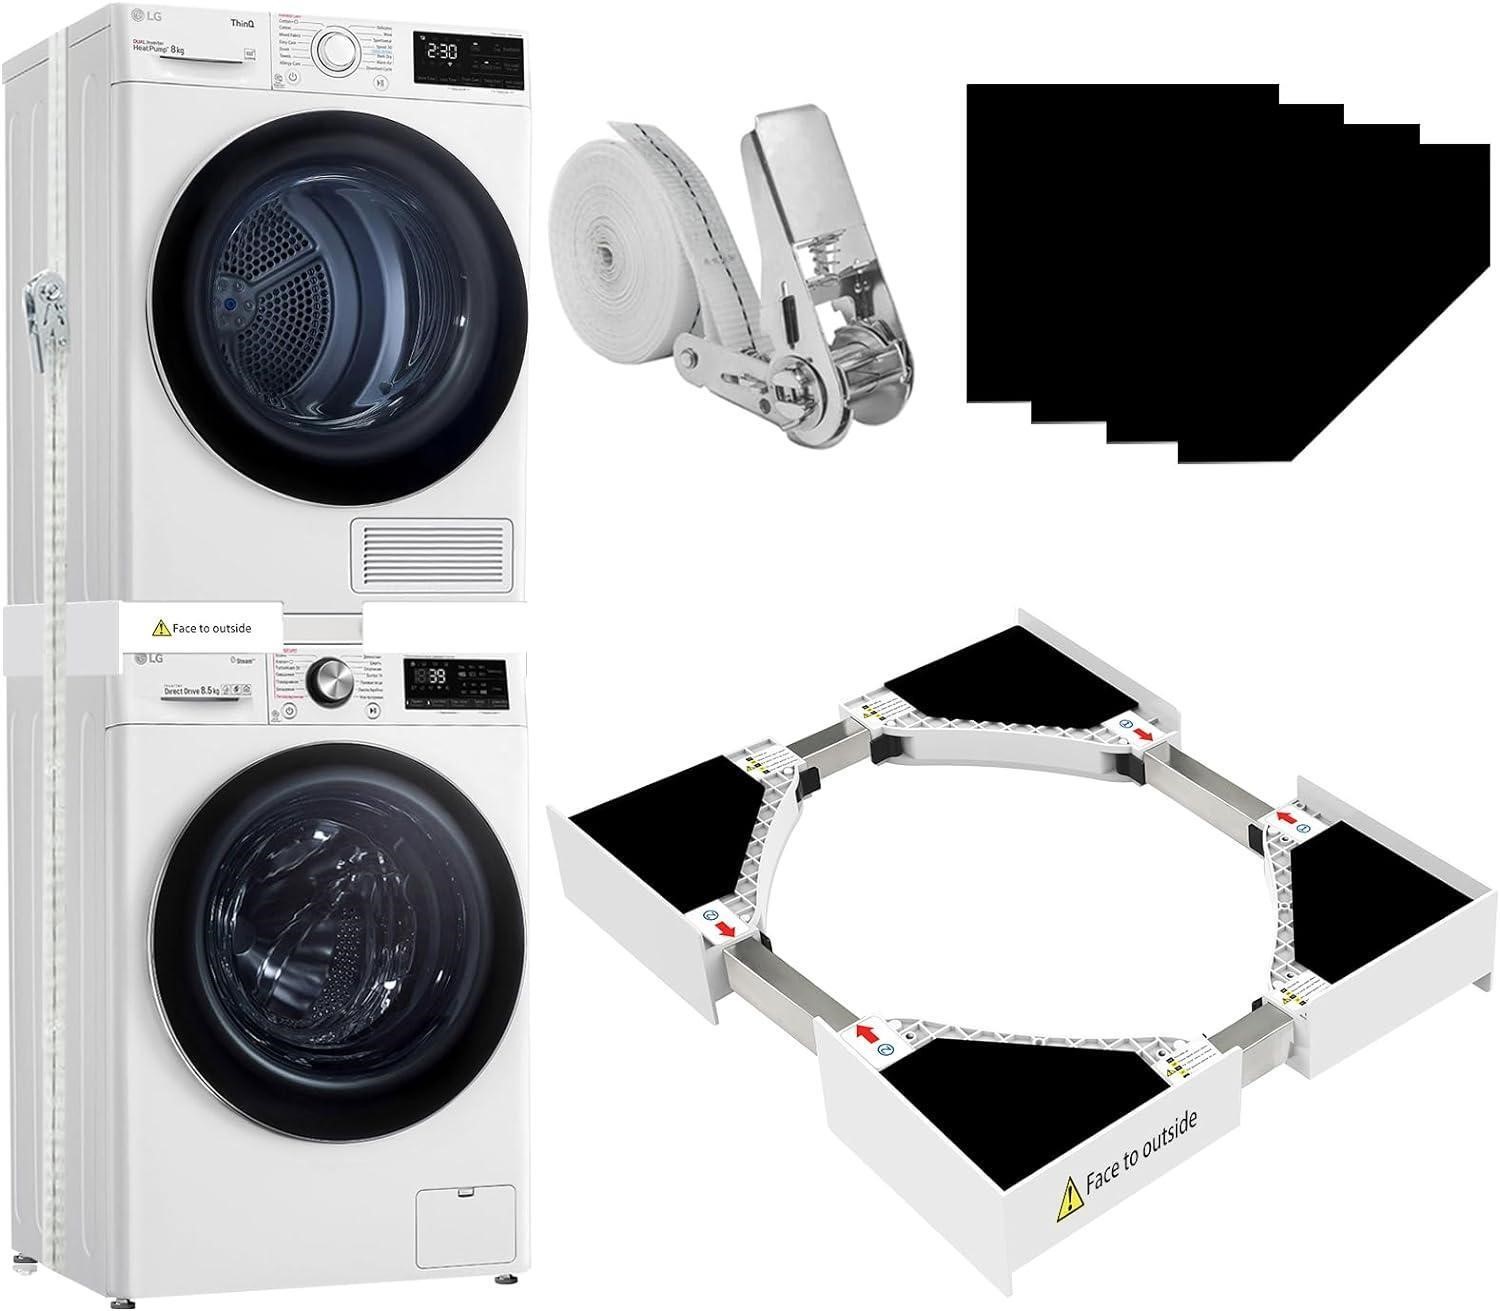 HHXRISE Universal Washer Dryer Kit